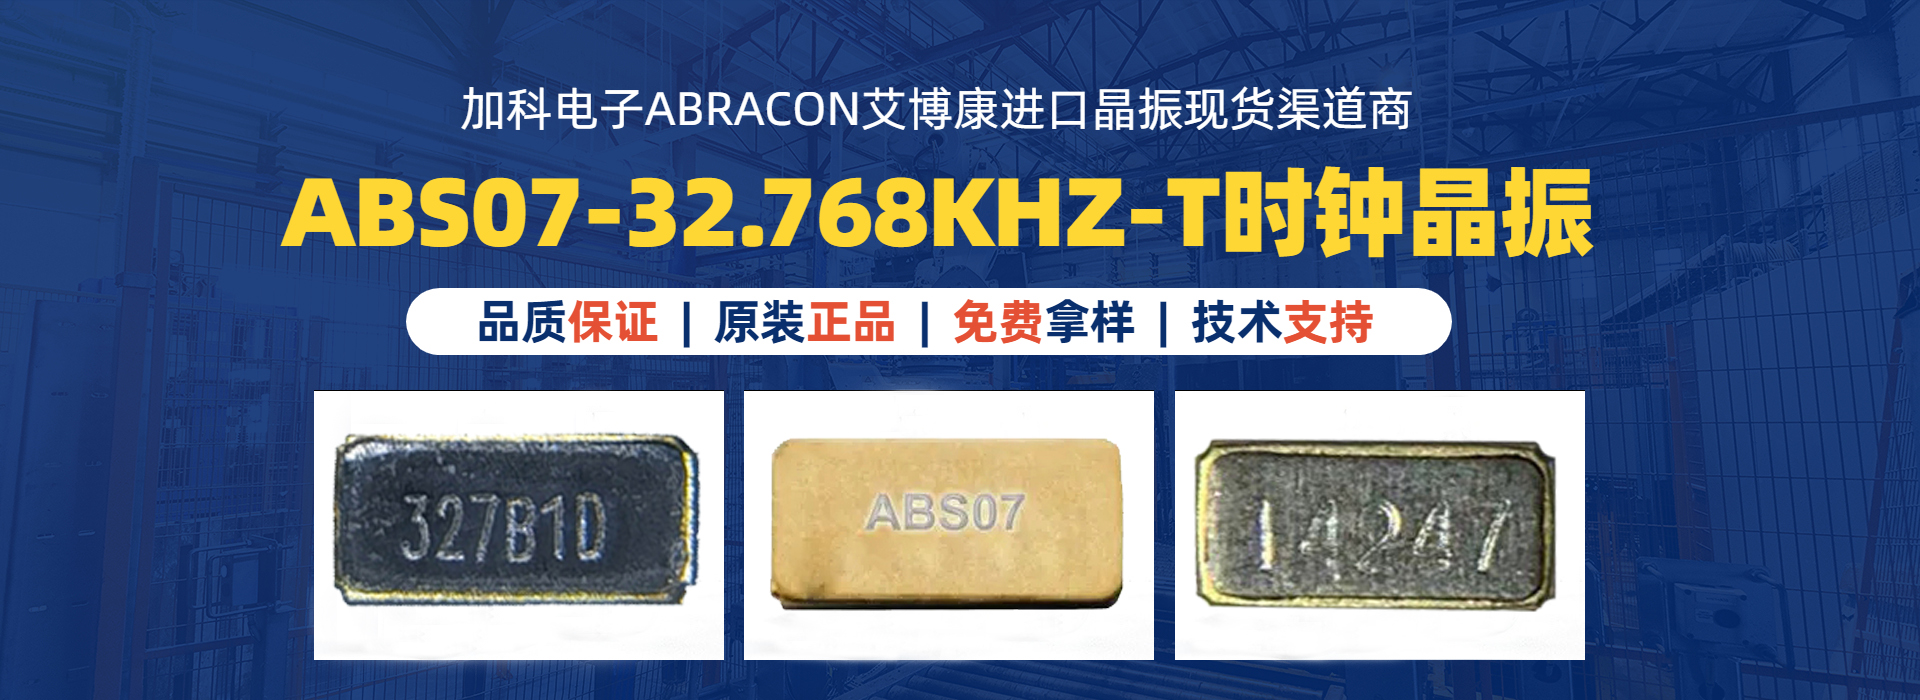 ABS07-32.768KHZ-T晶振時鐘模塊的最佳組合